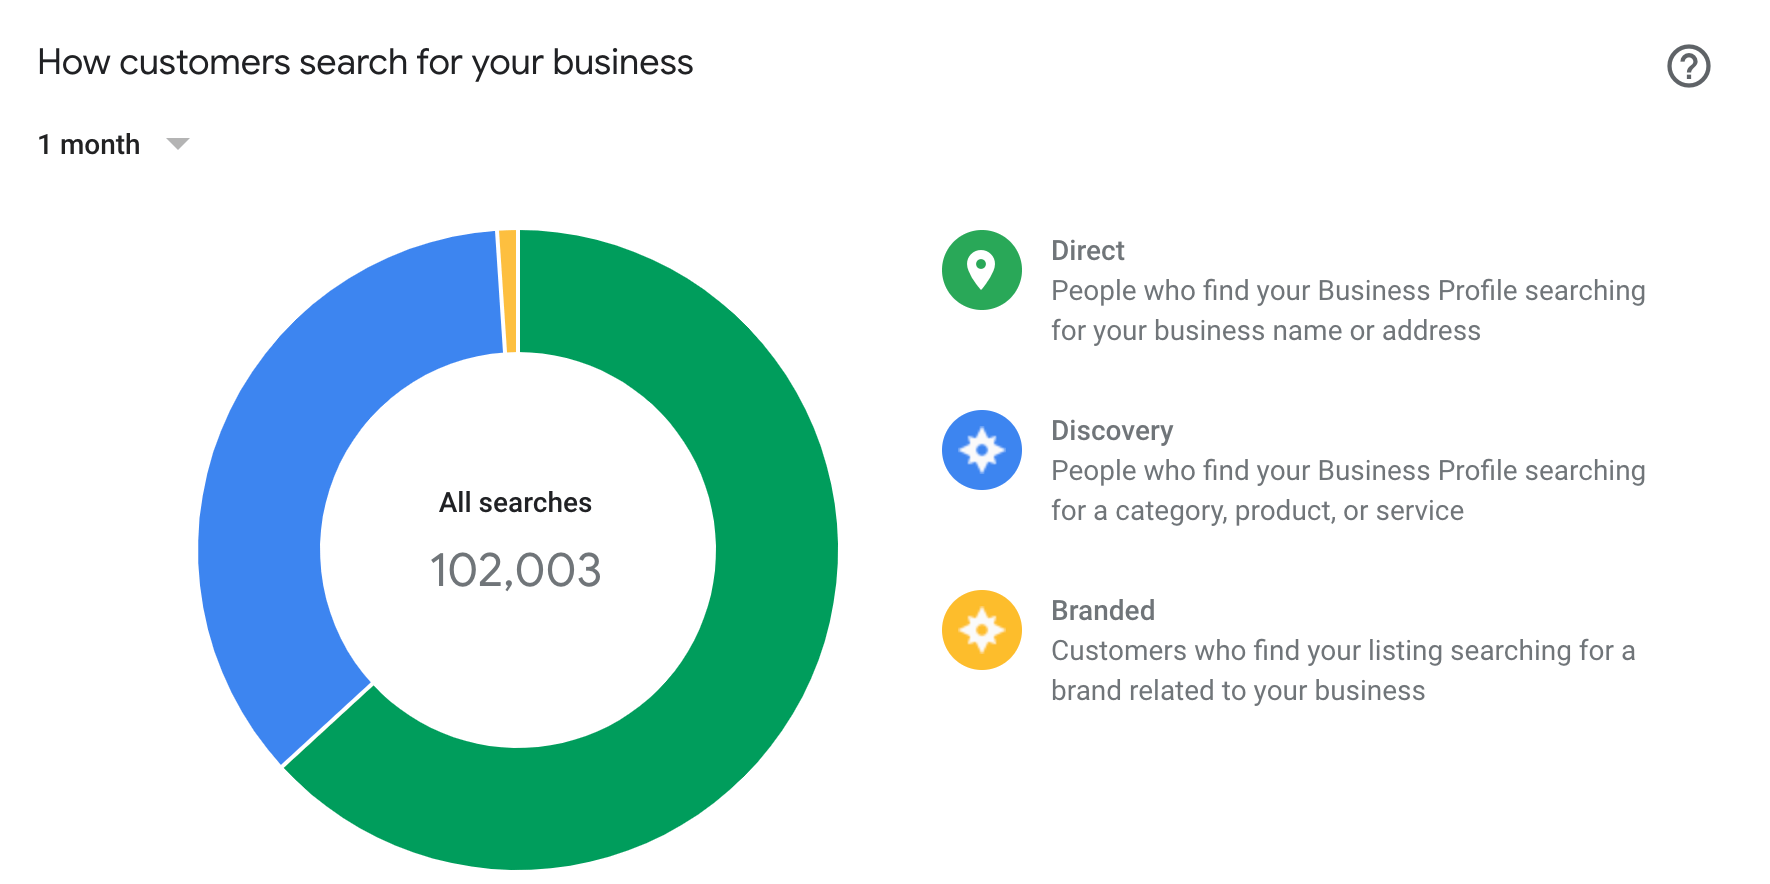 Google Business Profile Search Breakdown